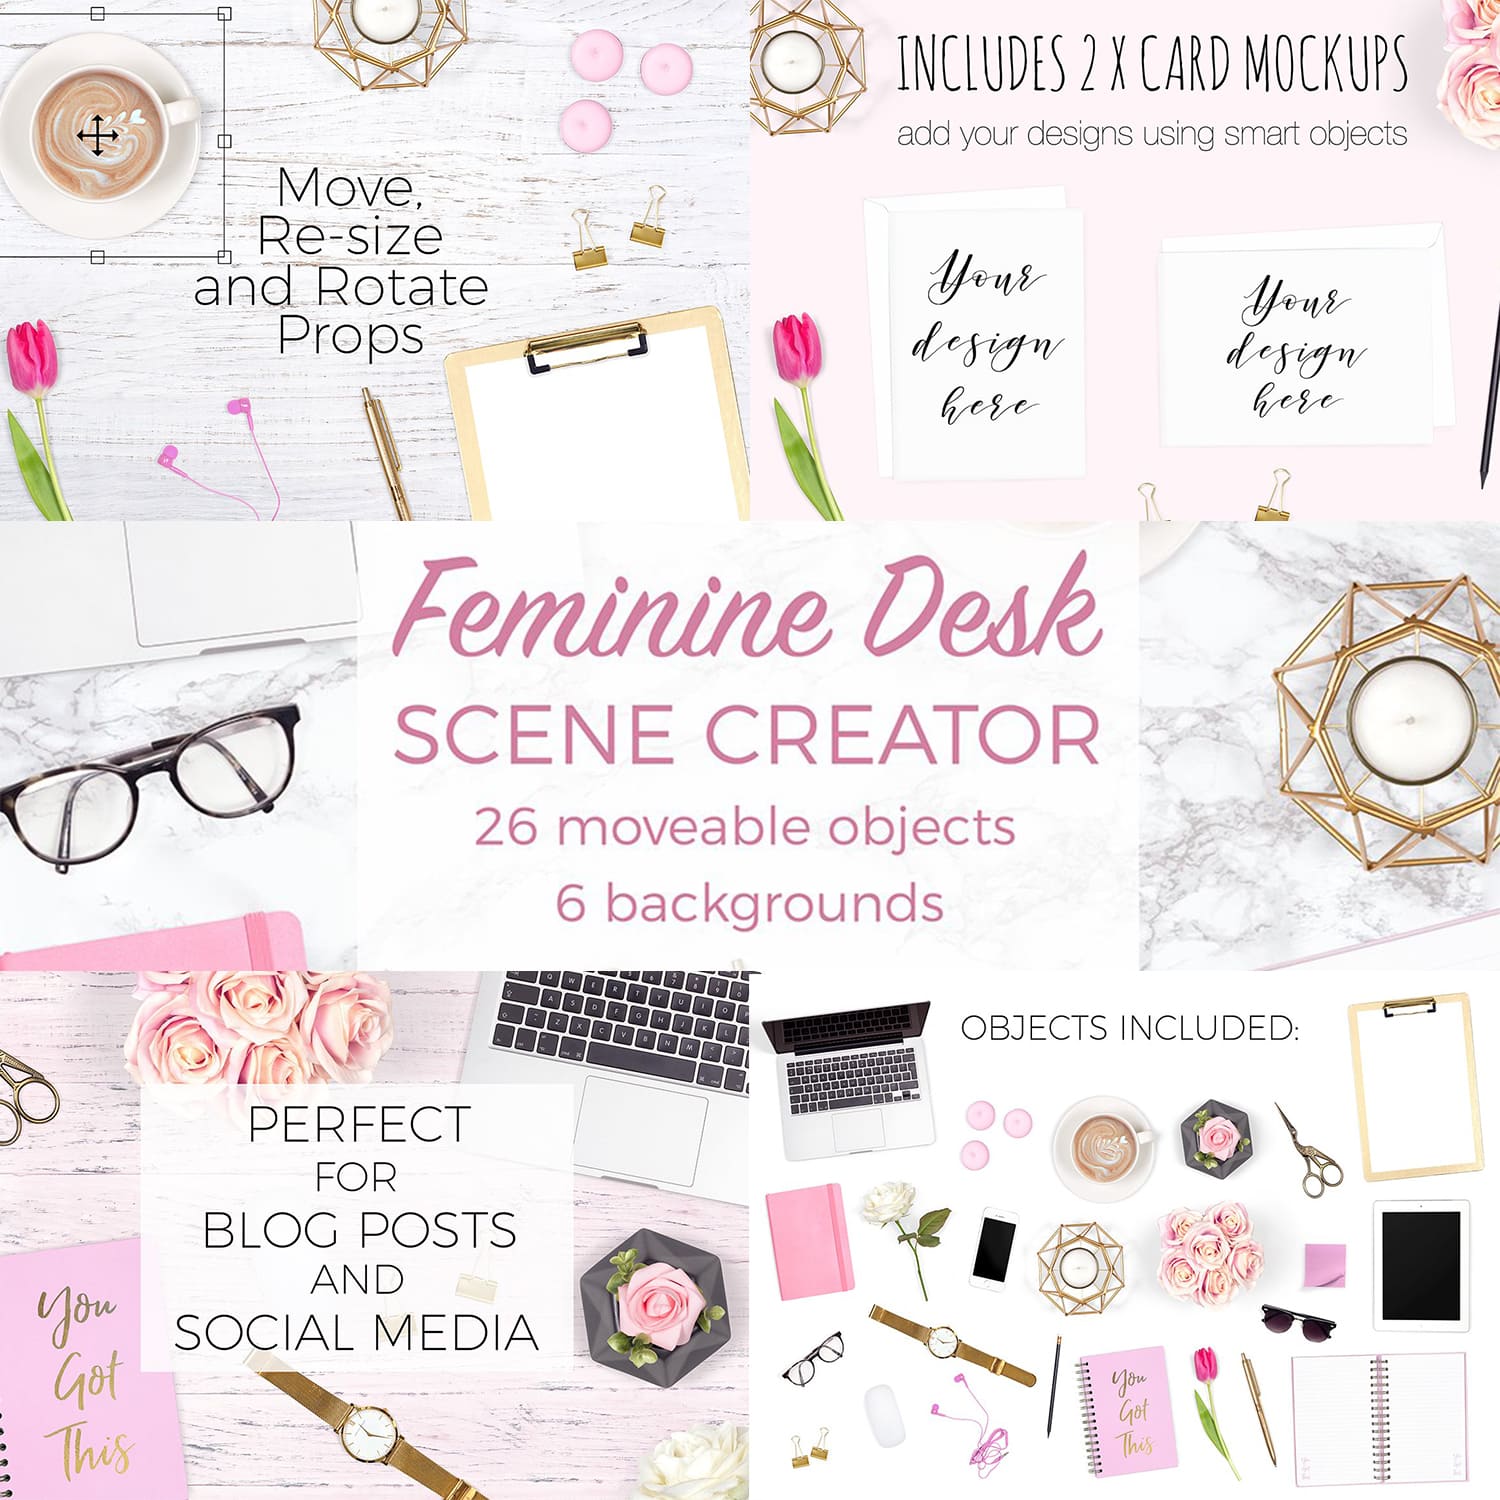 Feminine Desk Scene Creator cover.